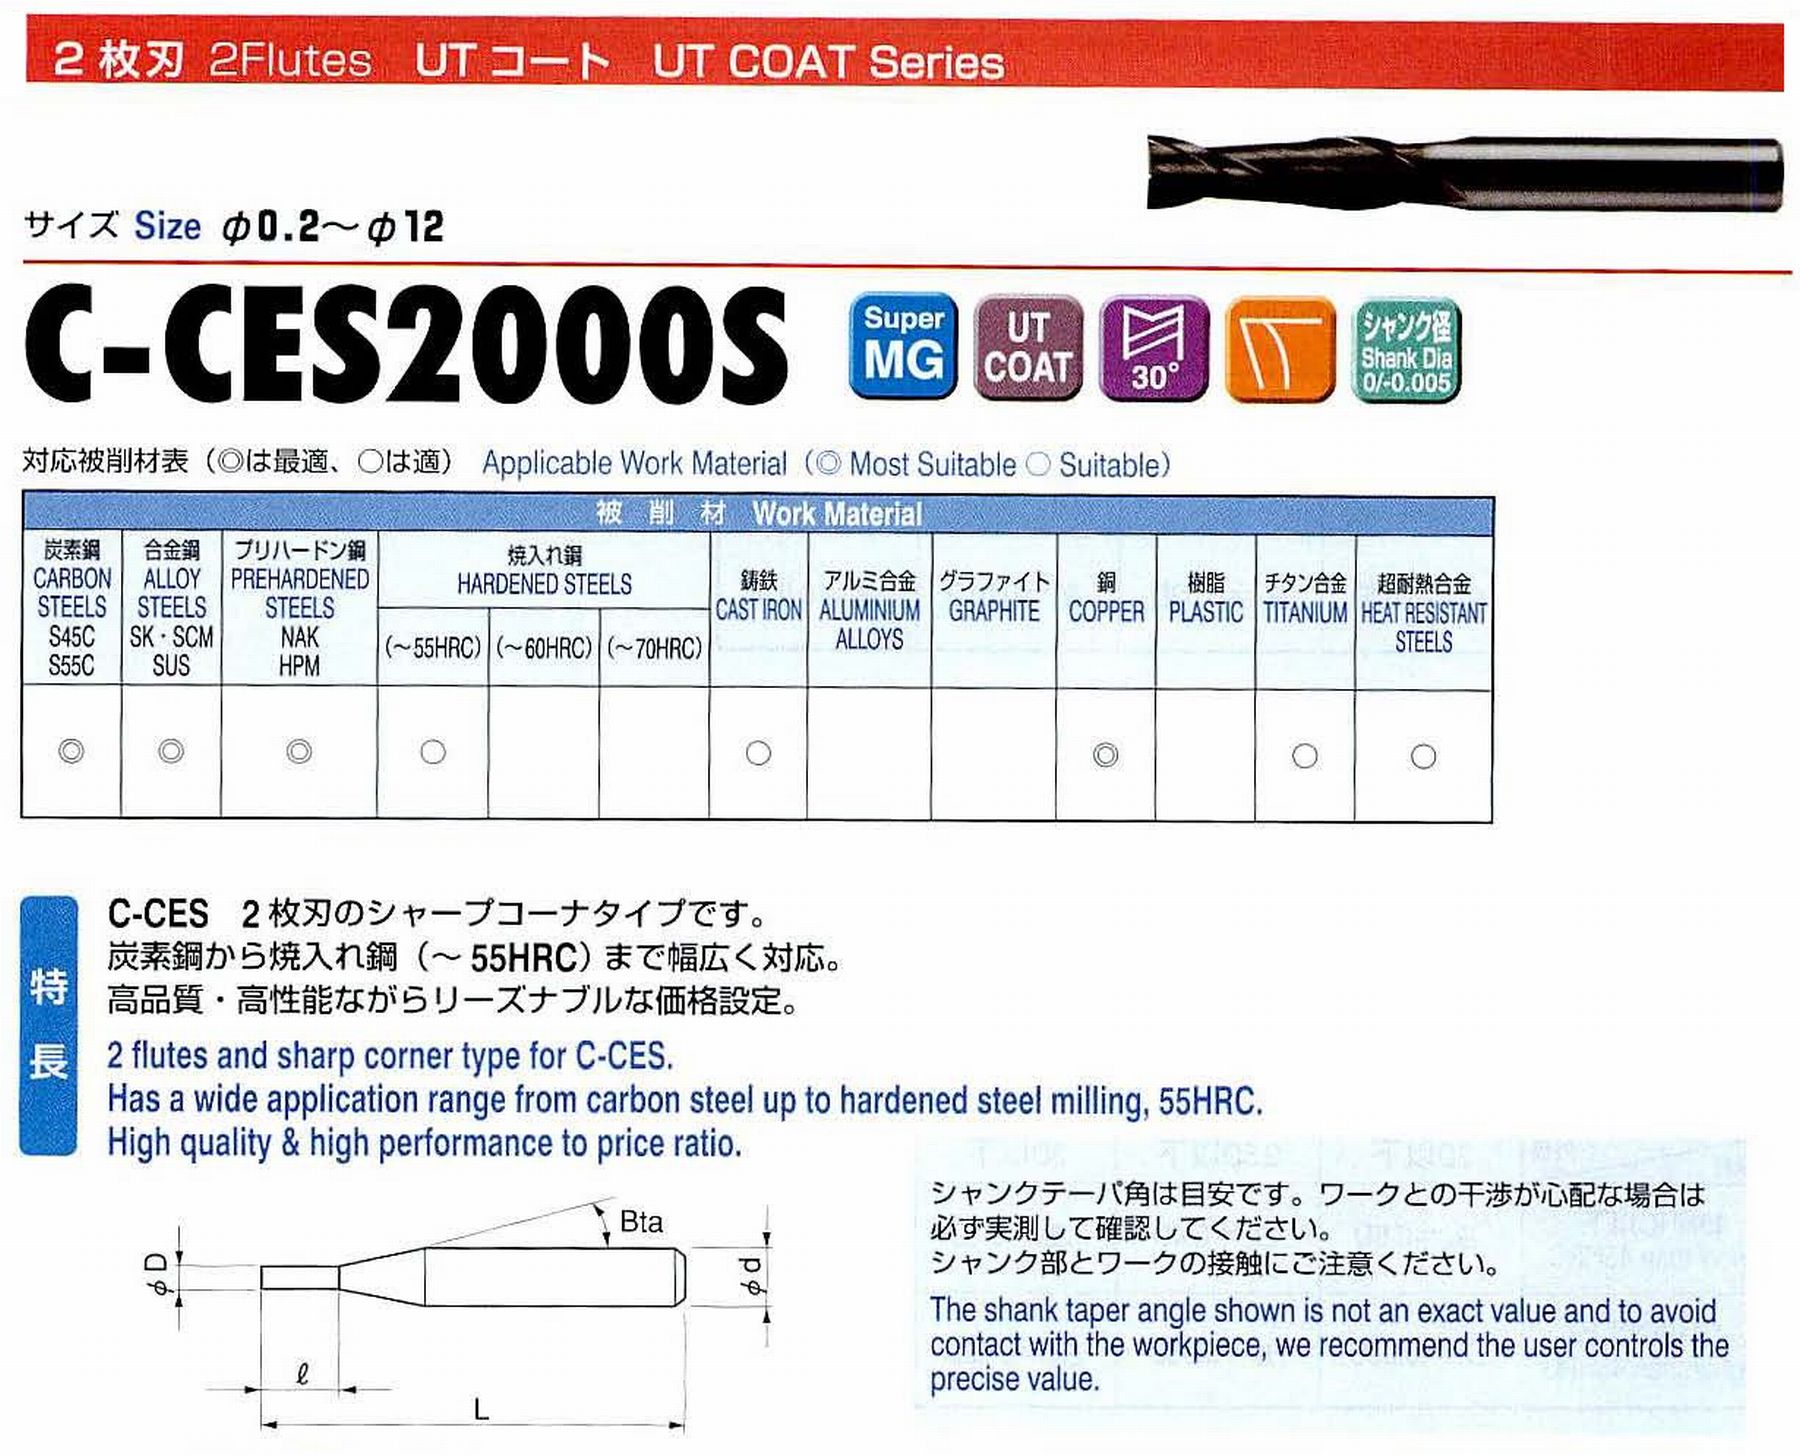 UNION 2枚刃 C-CES2008-0240S 外径0.8 刃長2.4 シャンクテーバ角16度 全長45 シャンク径4